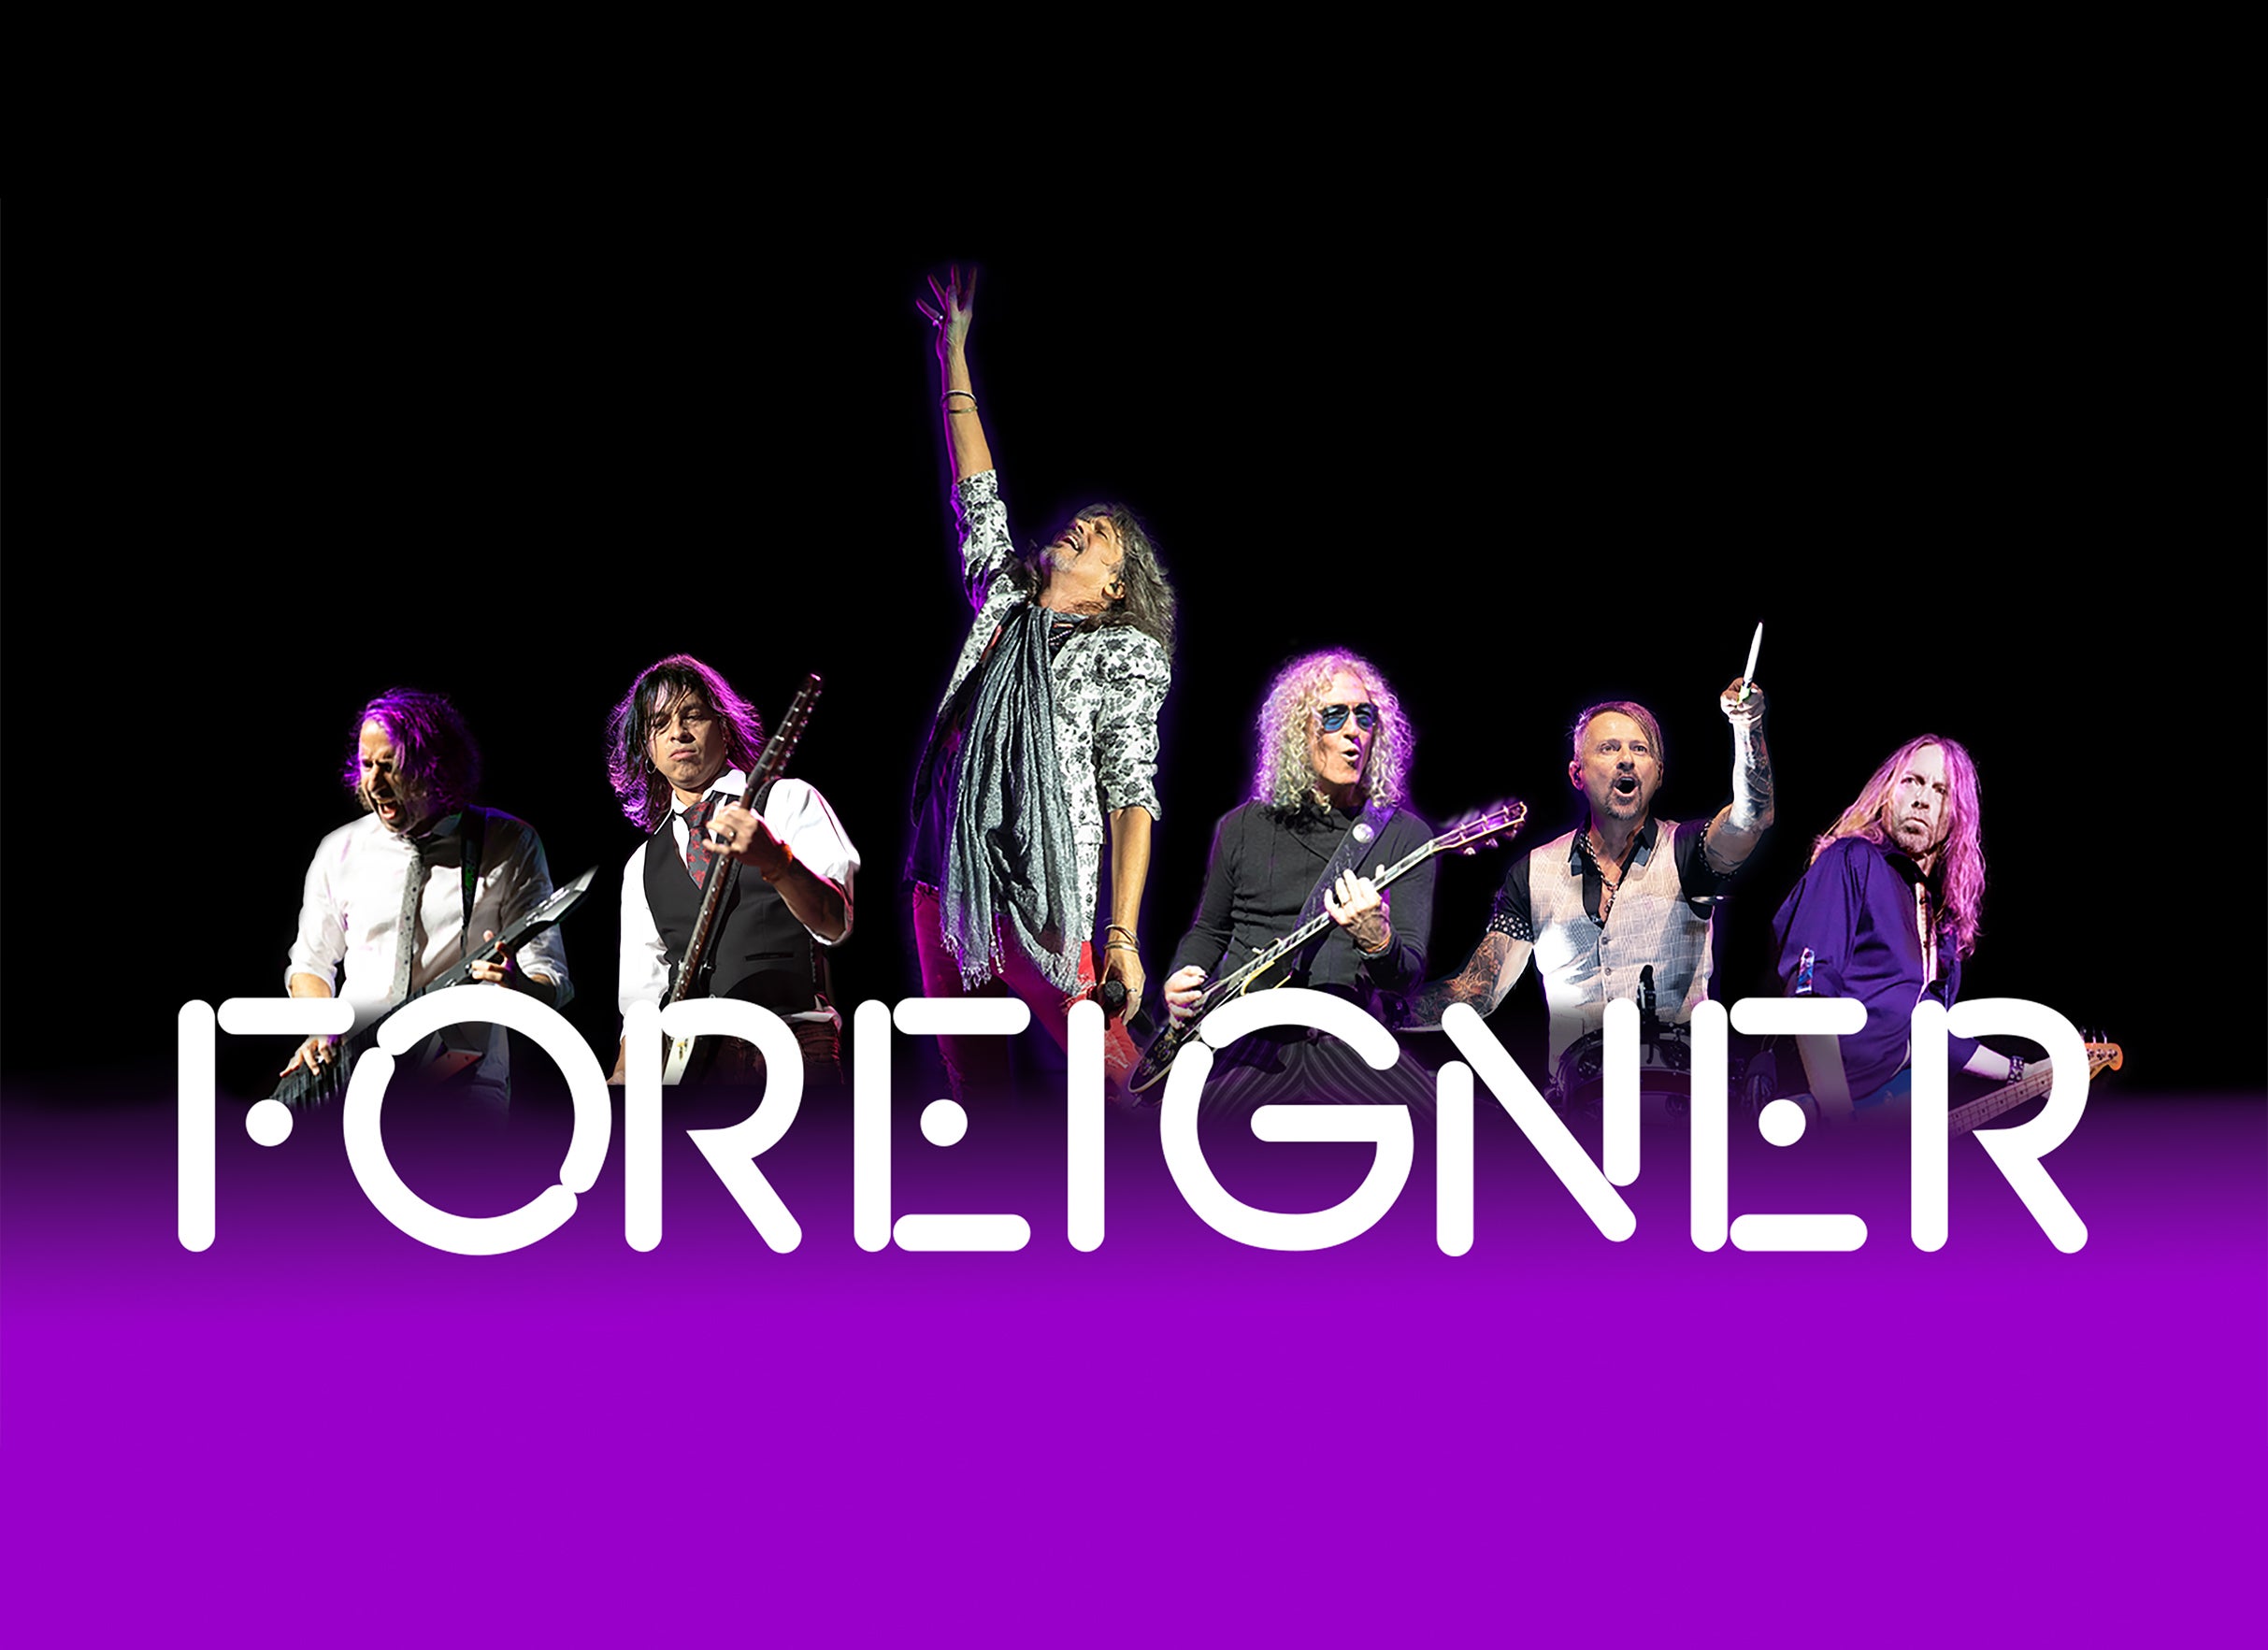 Foreigner: Feels Like the Last Time Farewell Tour in Las Vegas promo photo for Venetian presale offer code